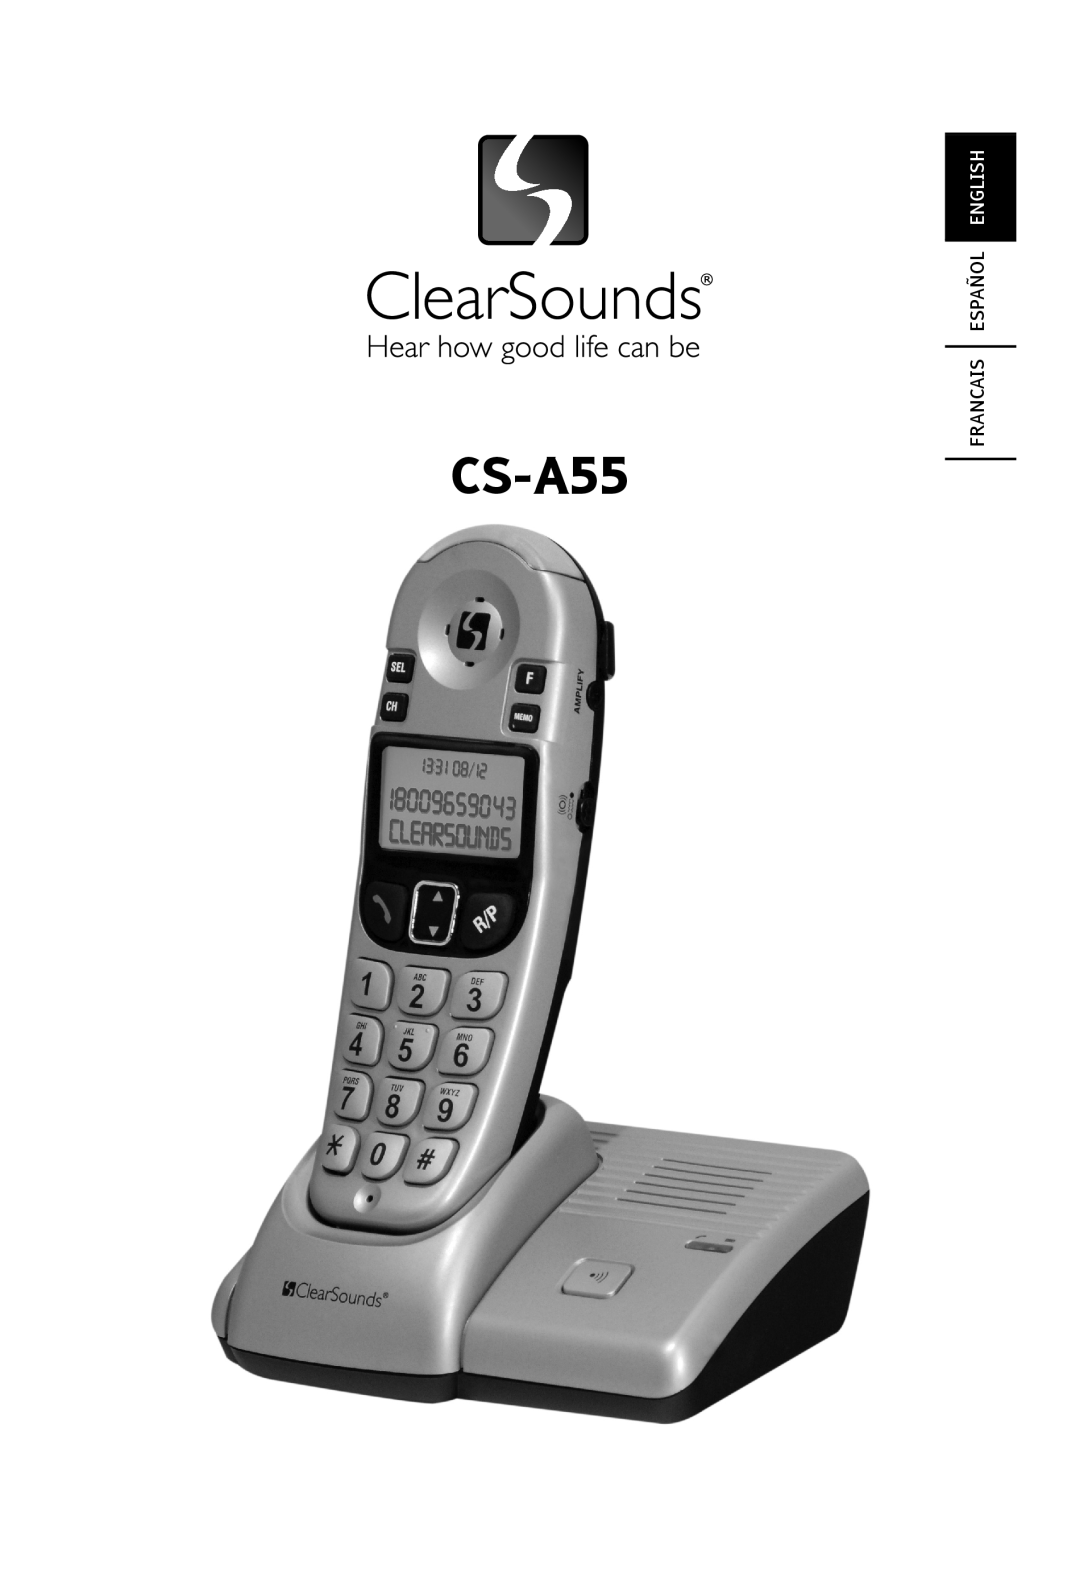 ClearSounds CS-A55 manual Francais Español English 